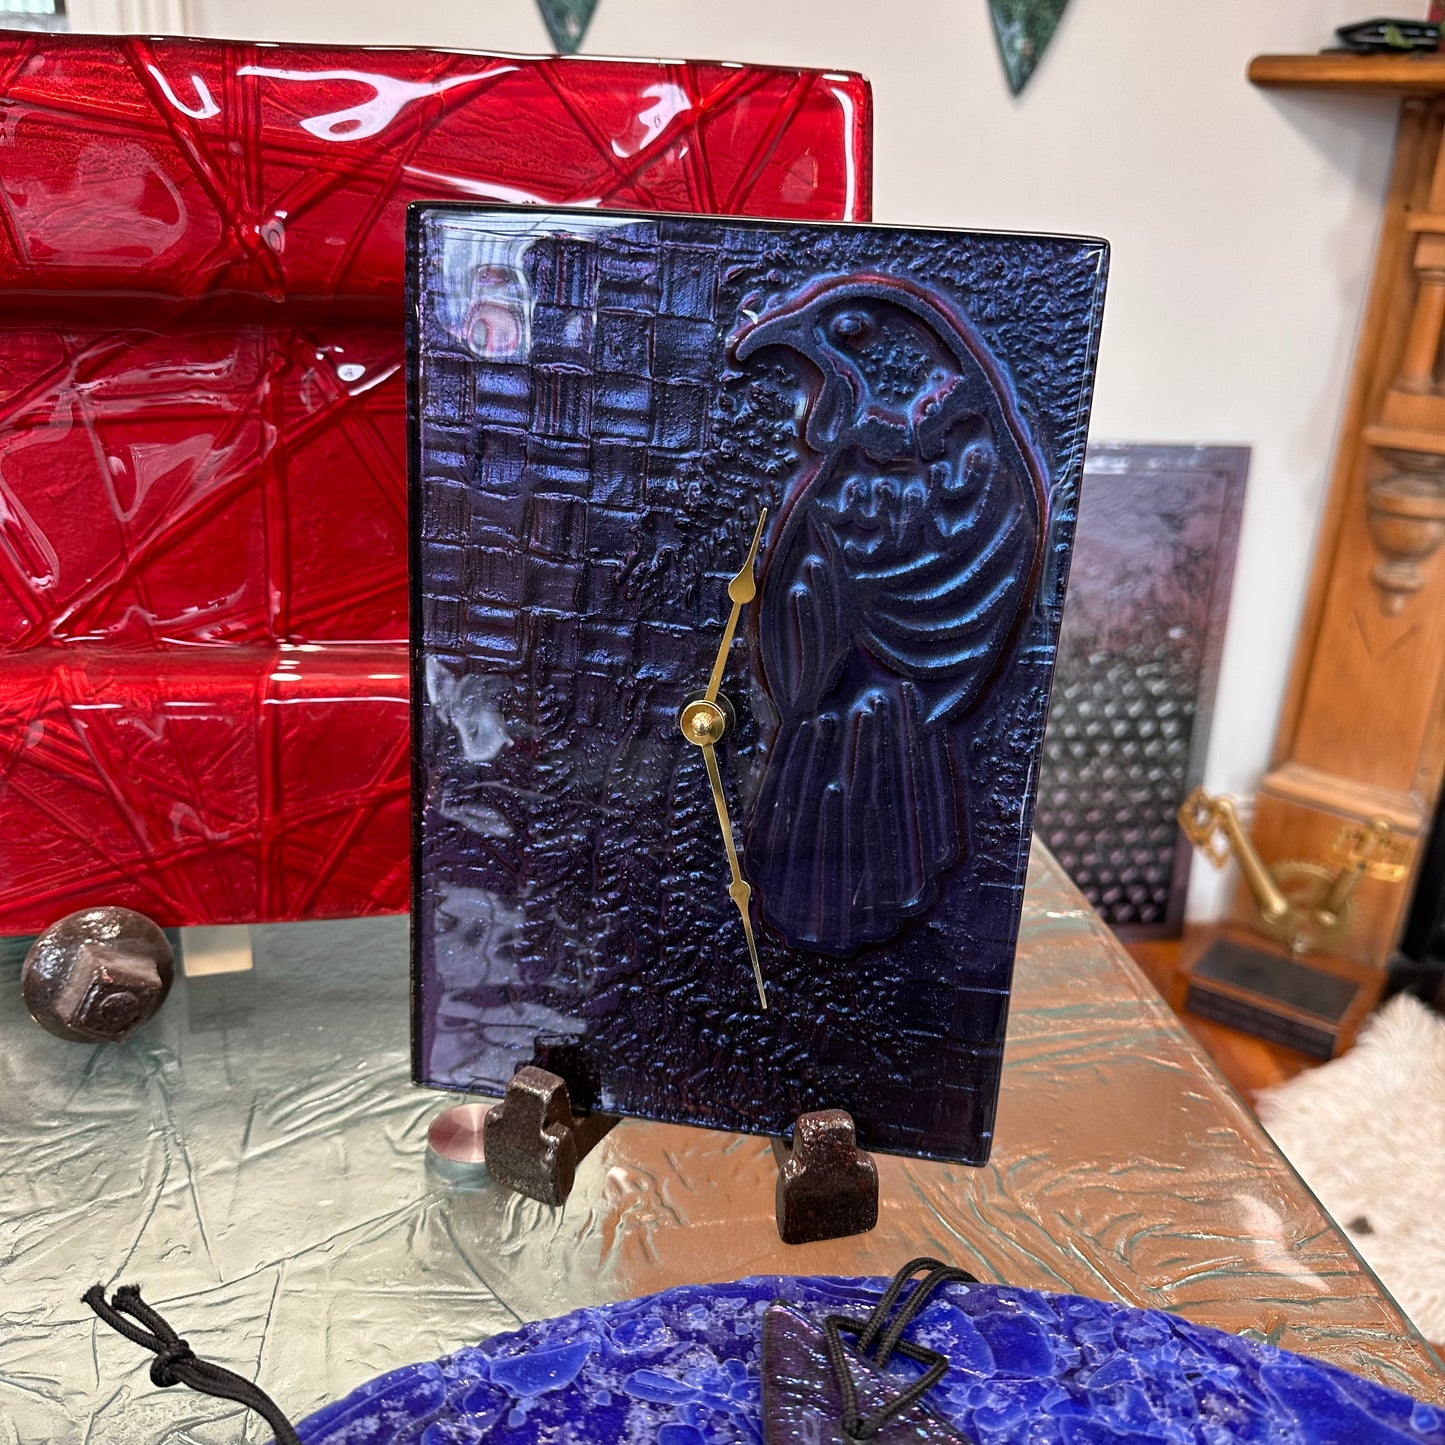 Tūi Twilight | Tui Glass Clock handmade in NZ - Escape Glass